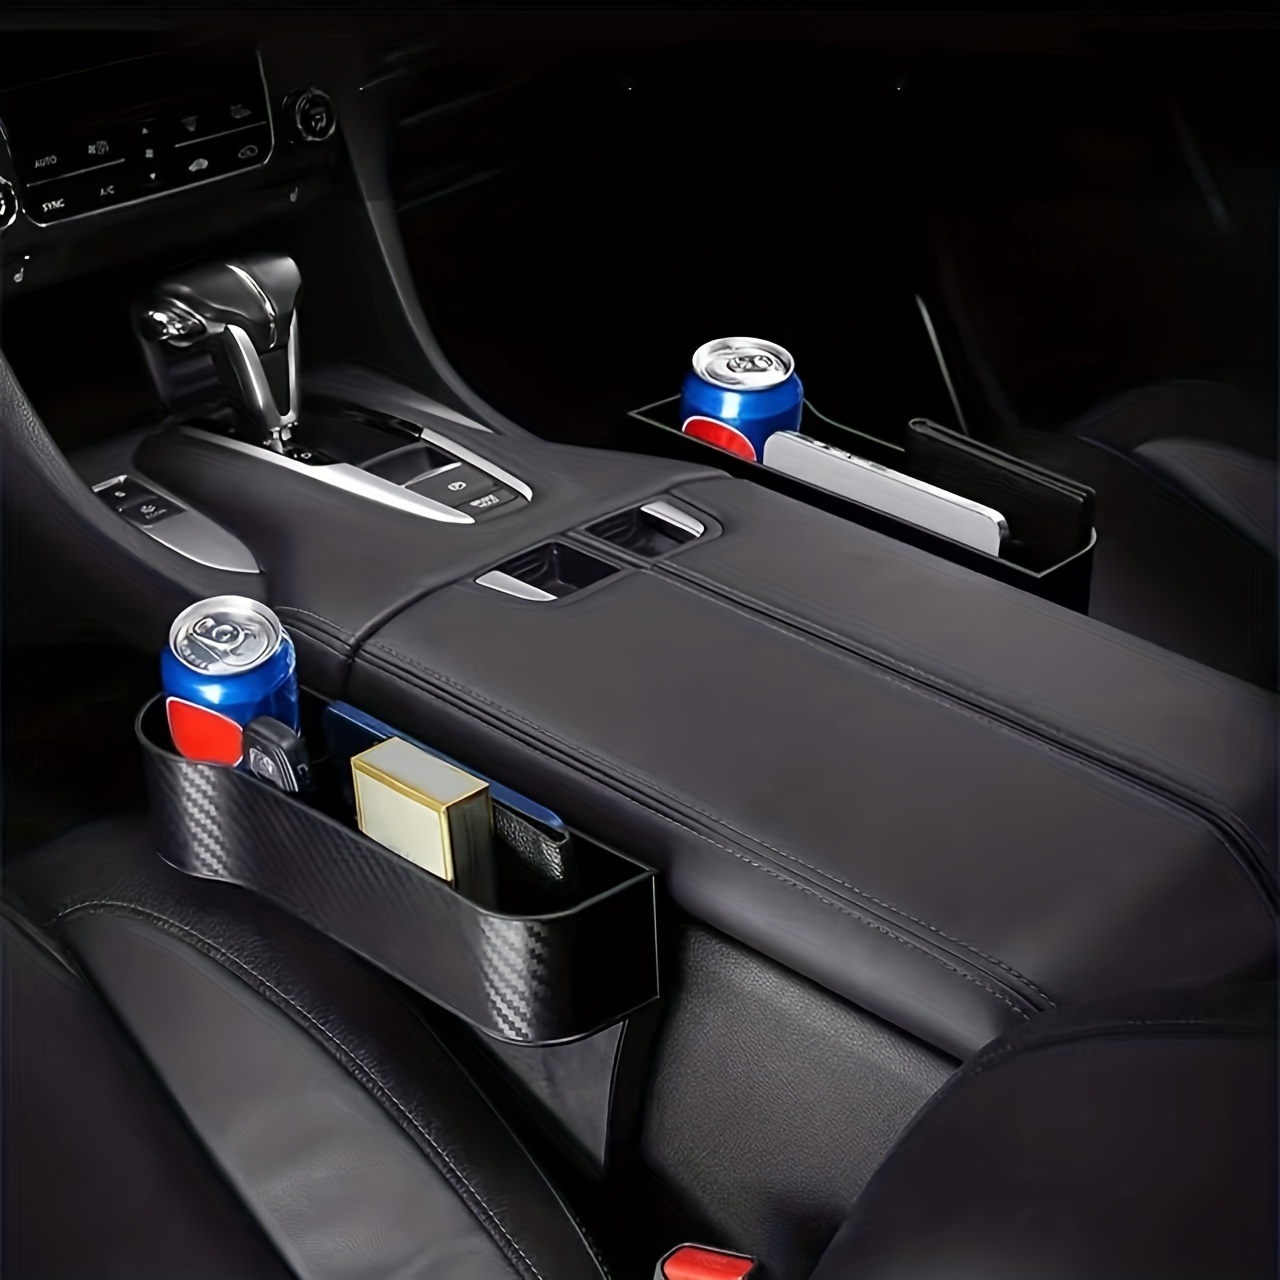 Lexus Car seat gap filler